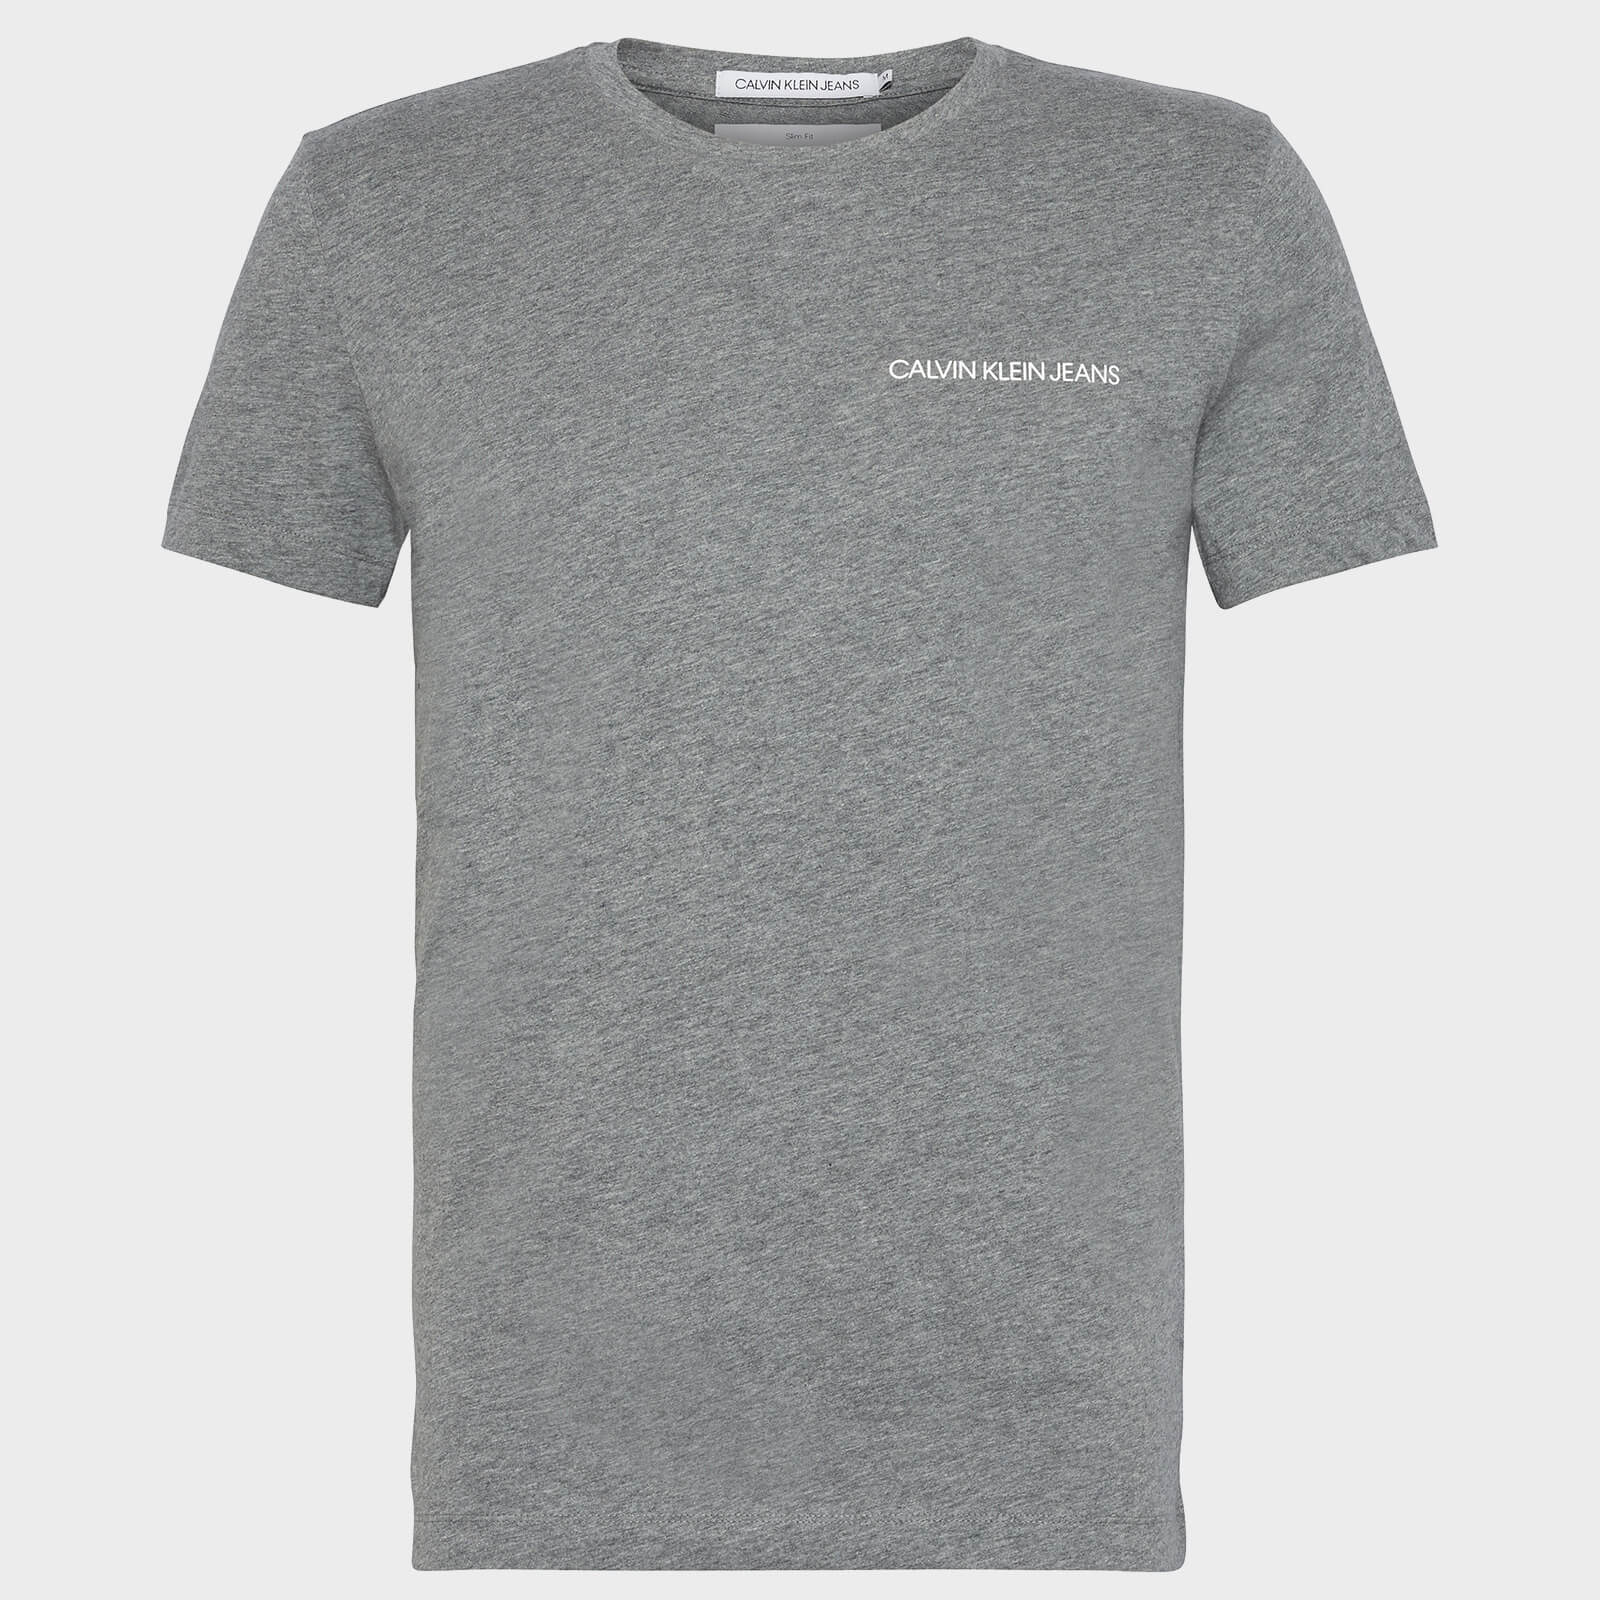 Calvin Klein Jeans Men's Institutional Logo T-Shirt - Grey Heather - L